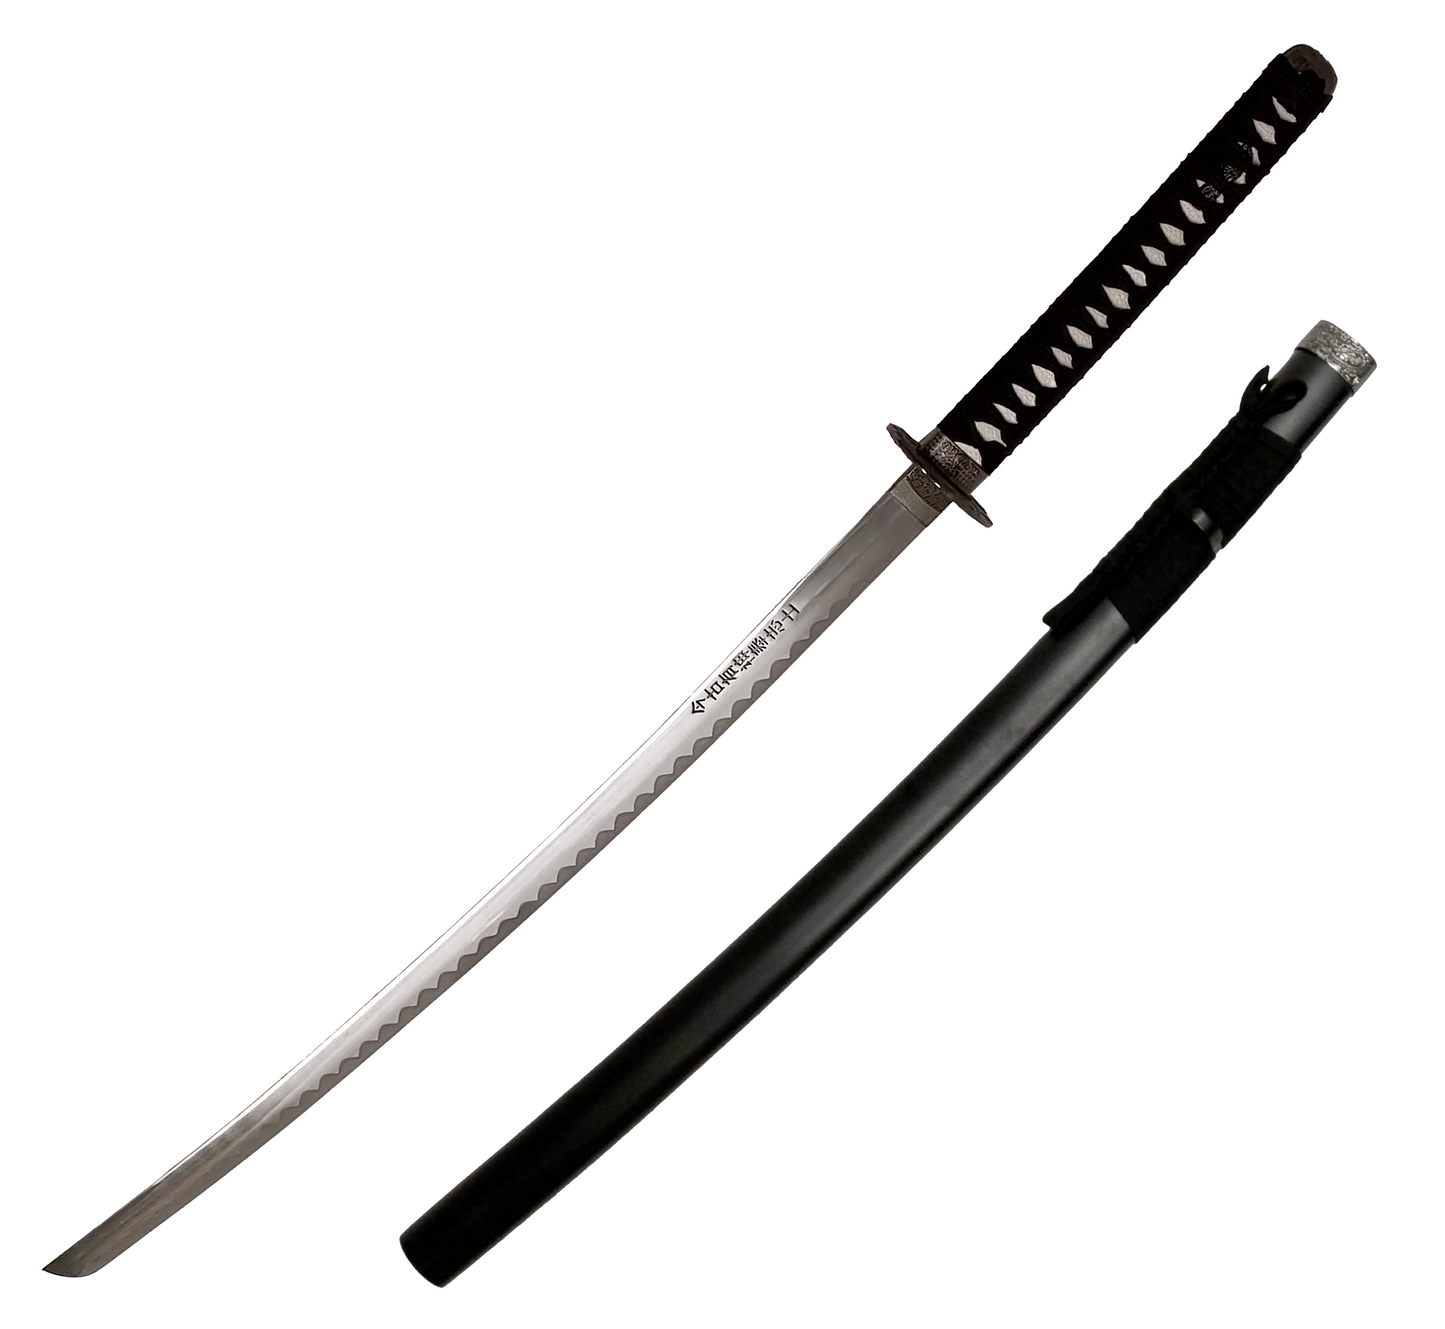 THE LAST SAMURAI - SPIRIT KATANA SWORD